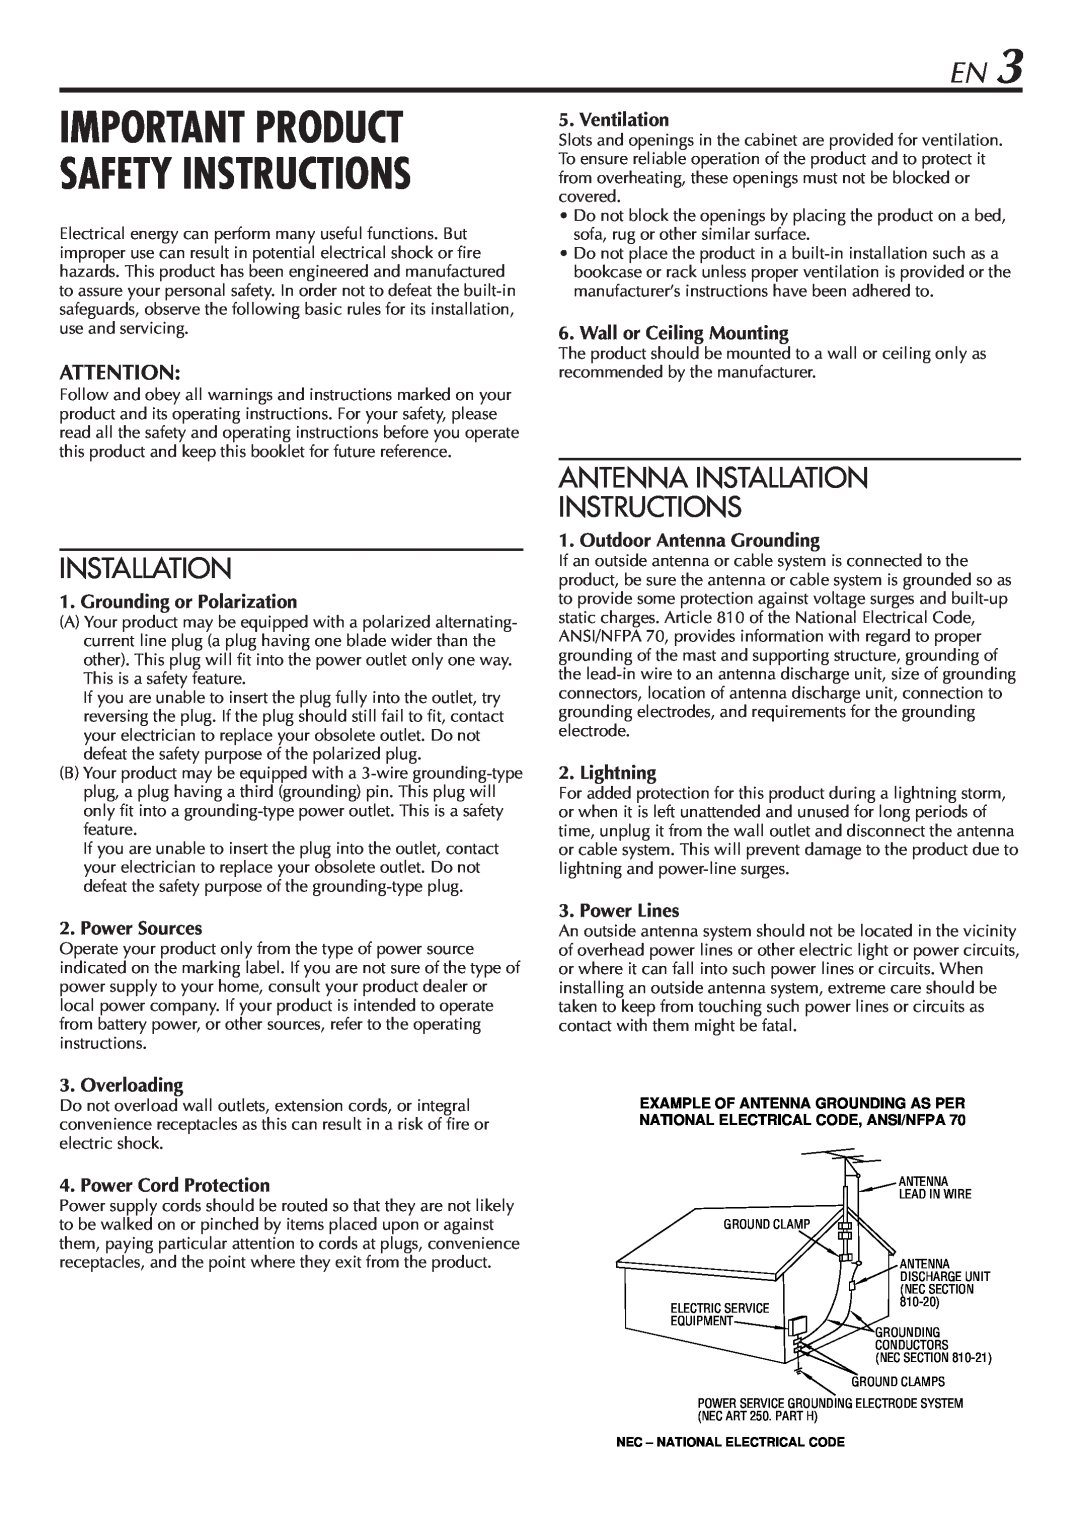 JVC SR-V10U manual Important Product Safety Instructions, Antenna Installation Instructions 